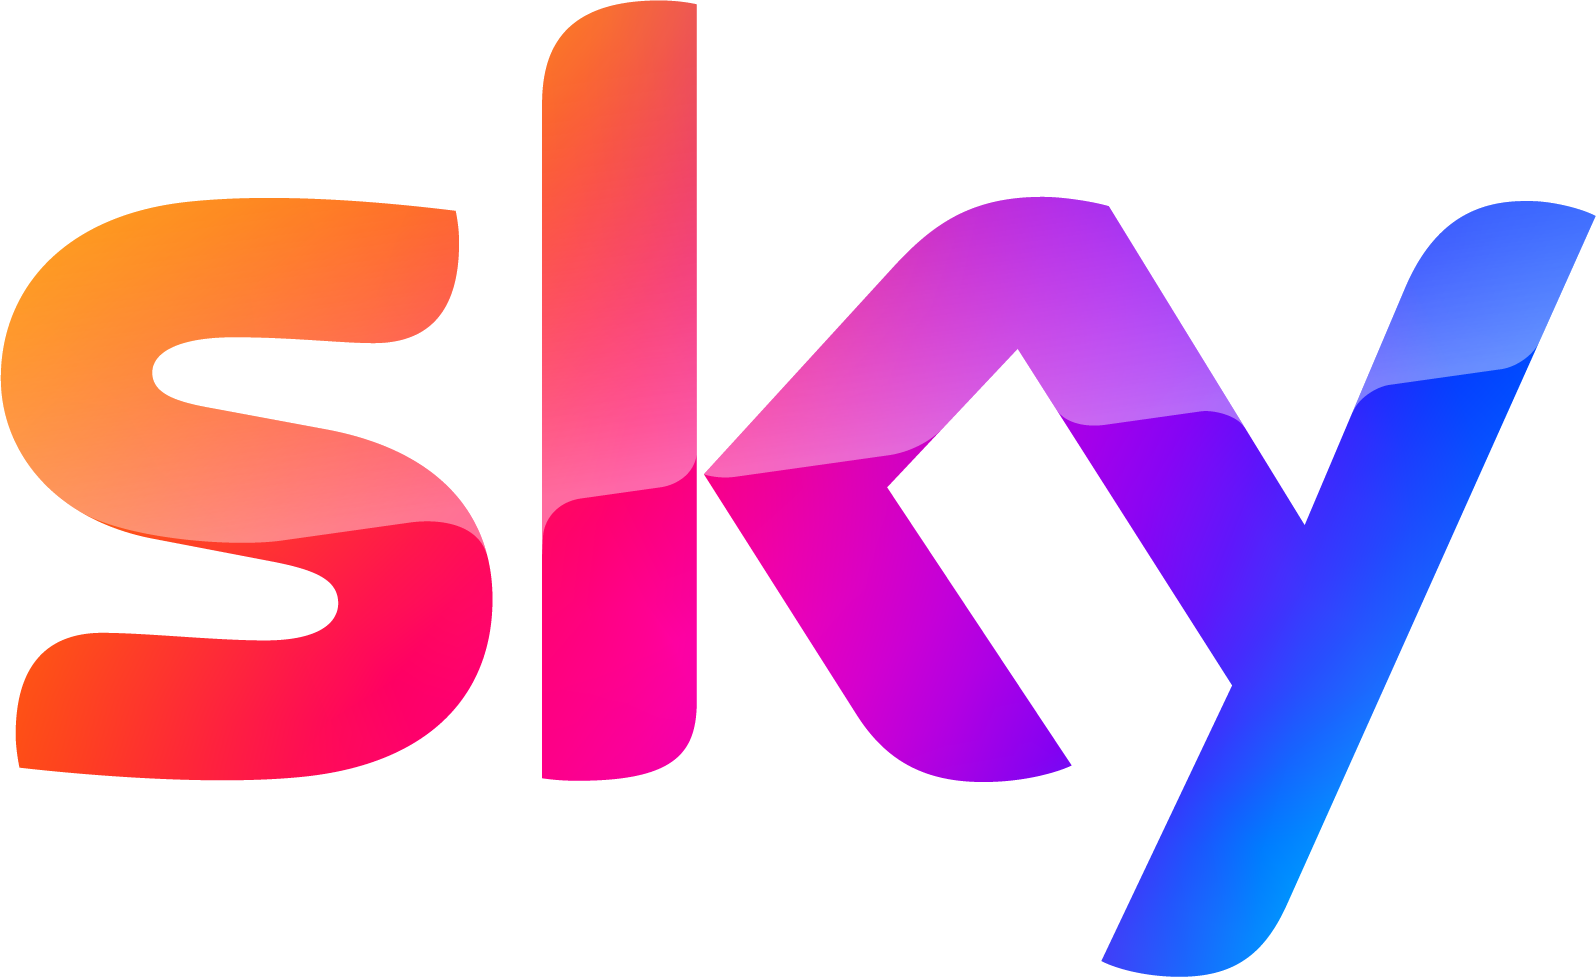 Sky's logo